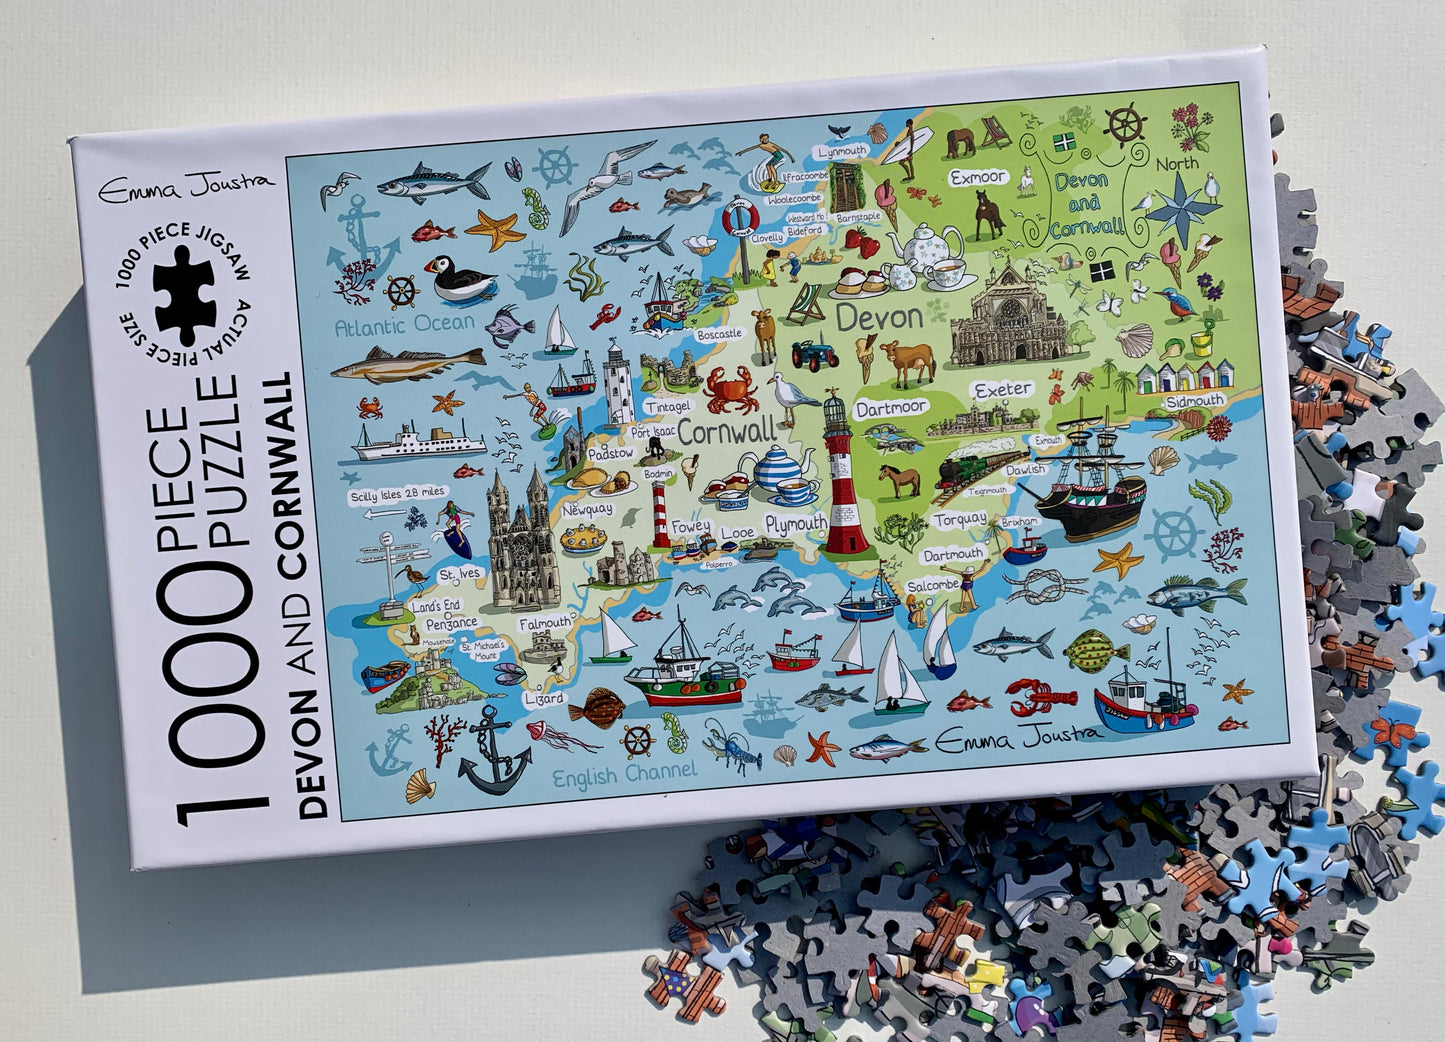 Devon and Cornwall 1,000 piece jigsaw puzzle